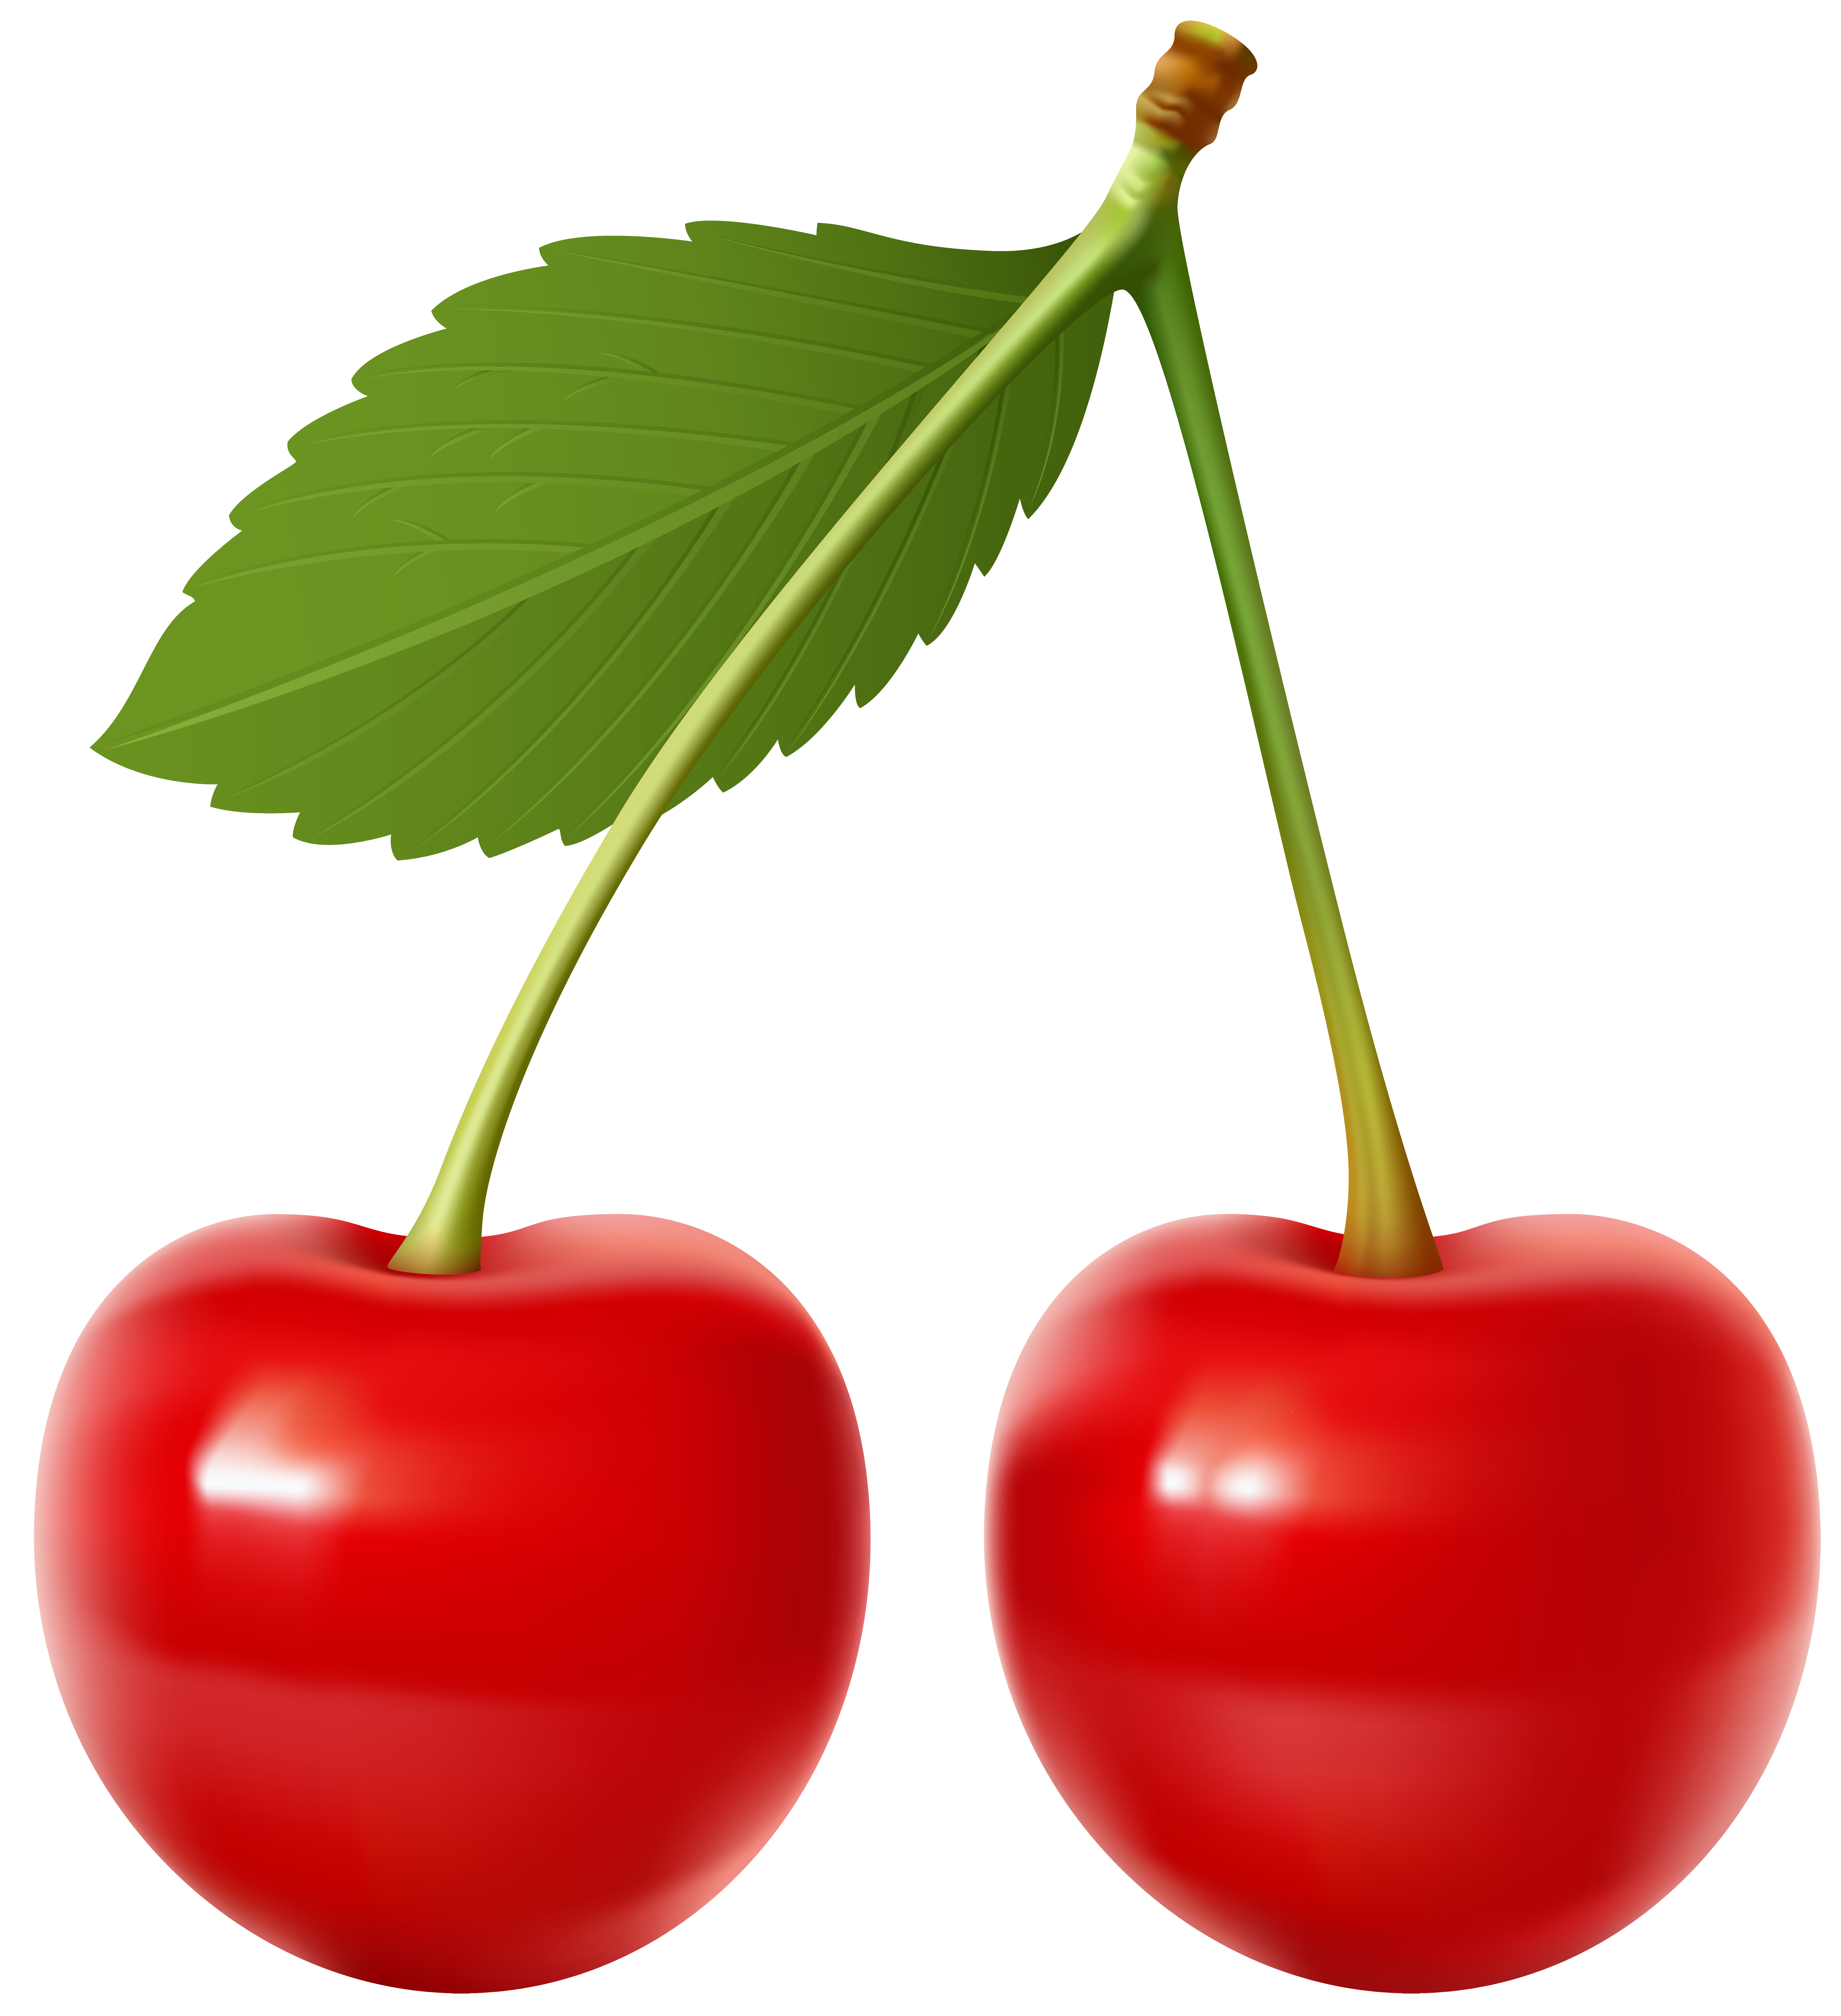 fruit clipart cherry